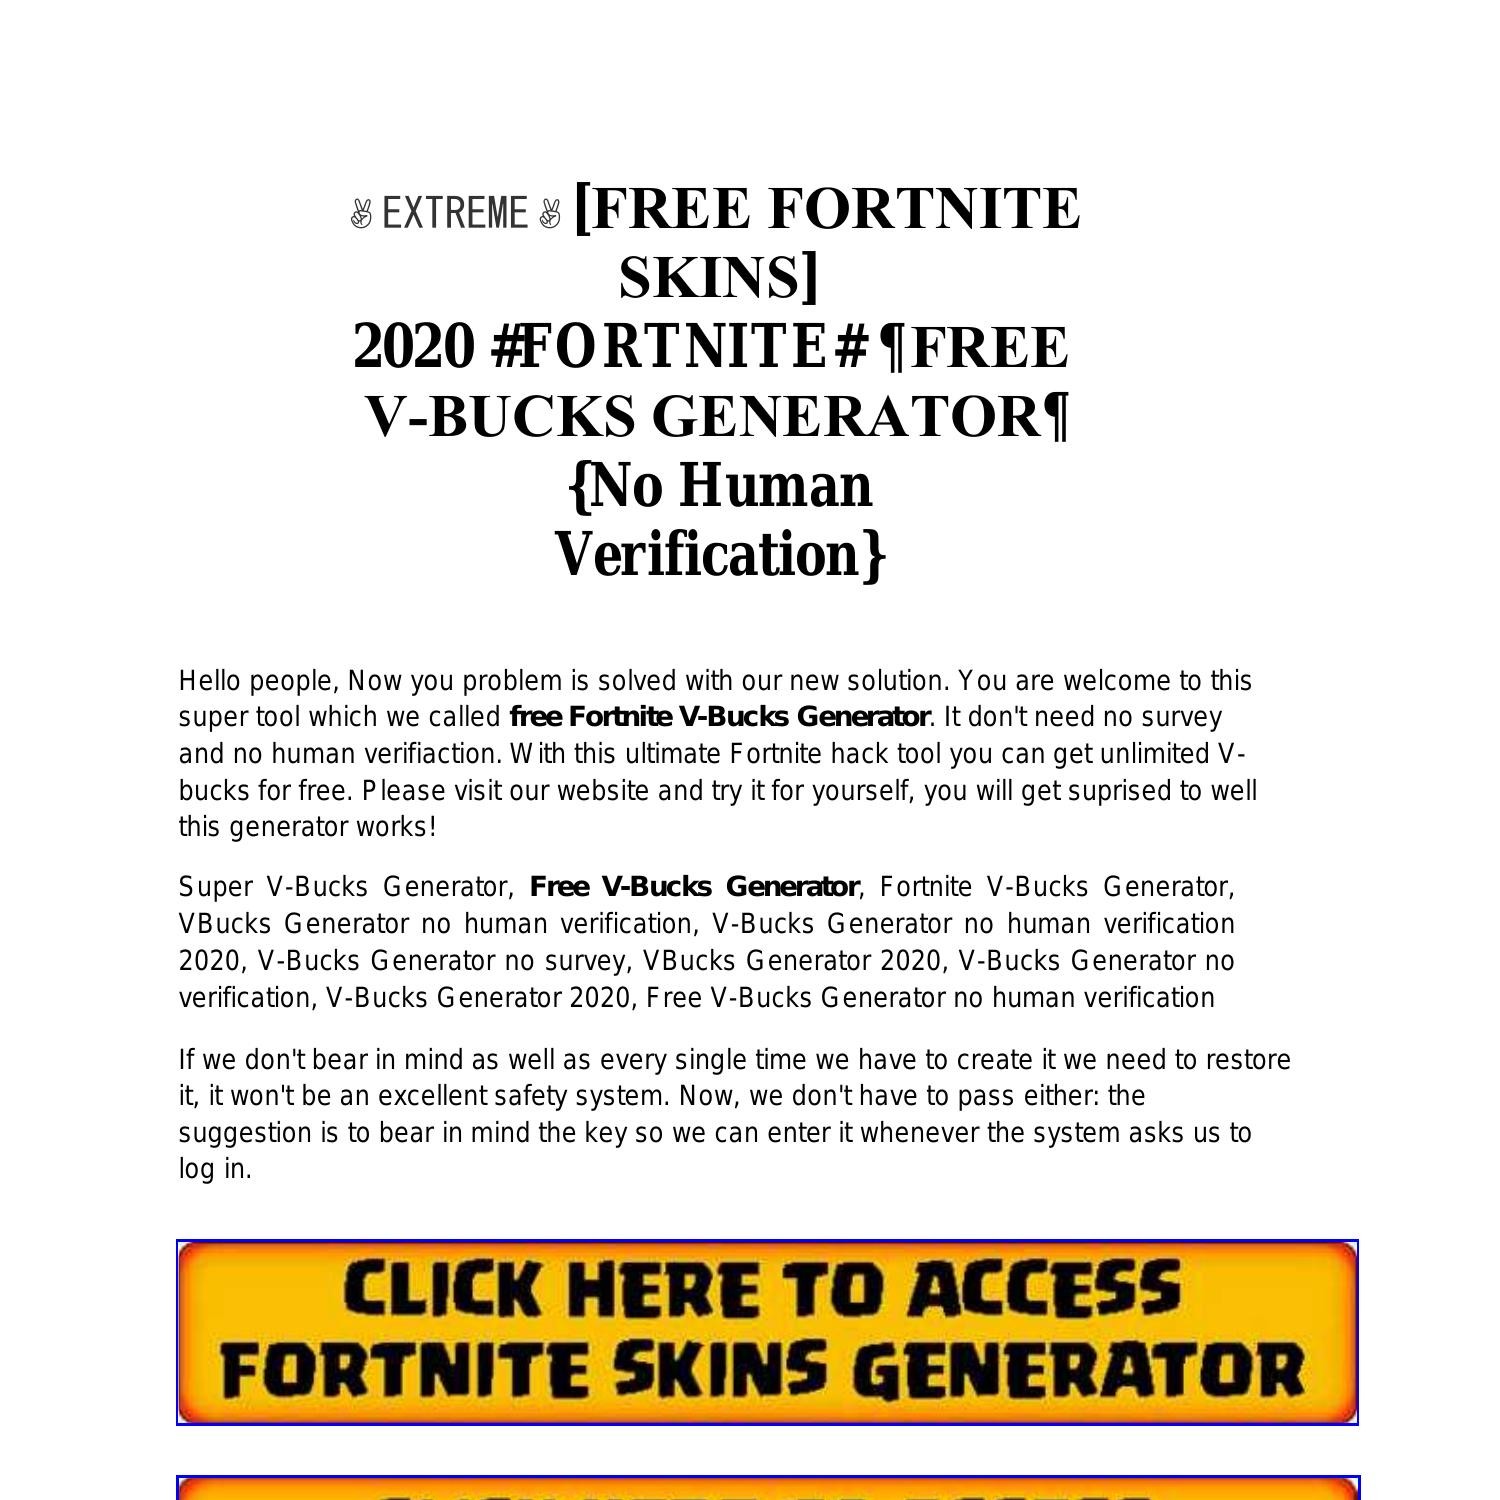 EXTREME [FREE FORTNITE SKINS] 2020 FORTNITE ¶FREE VBUCKS GENERATOR